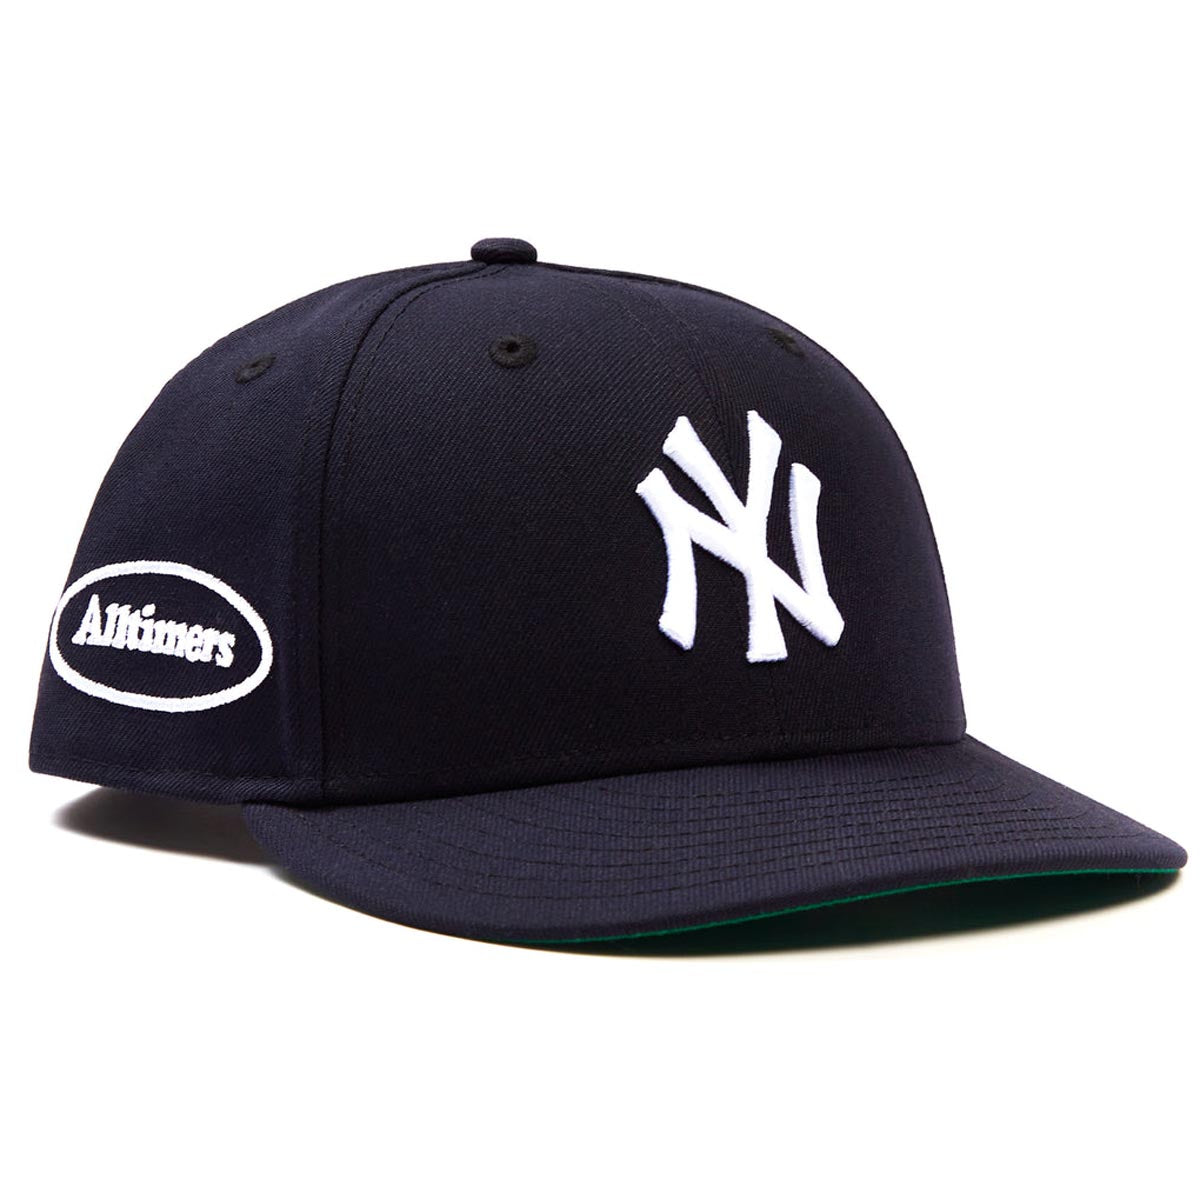 Alltimers x New Era Yankees Hat - Navy image 2